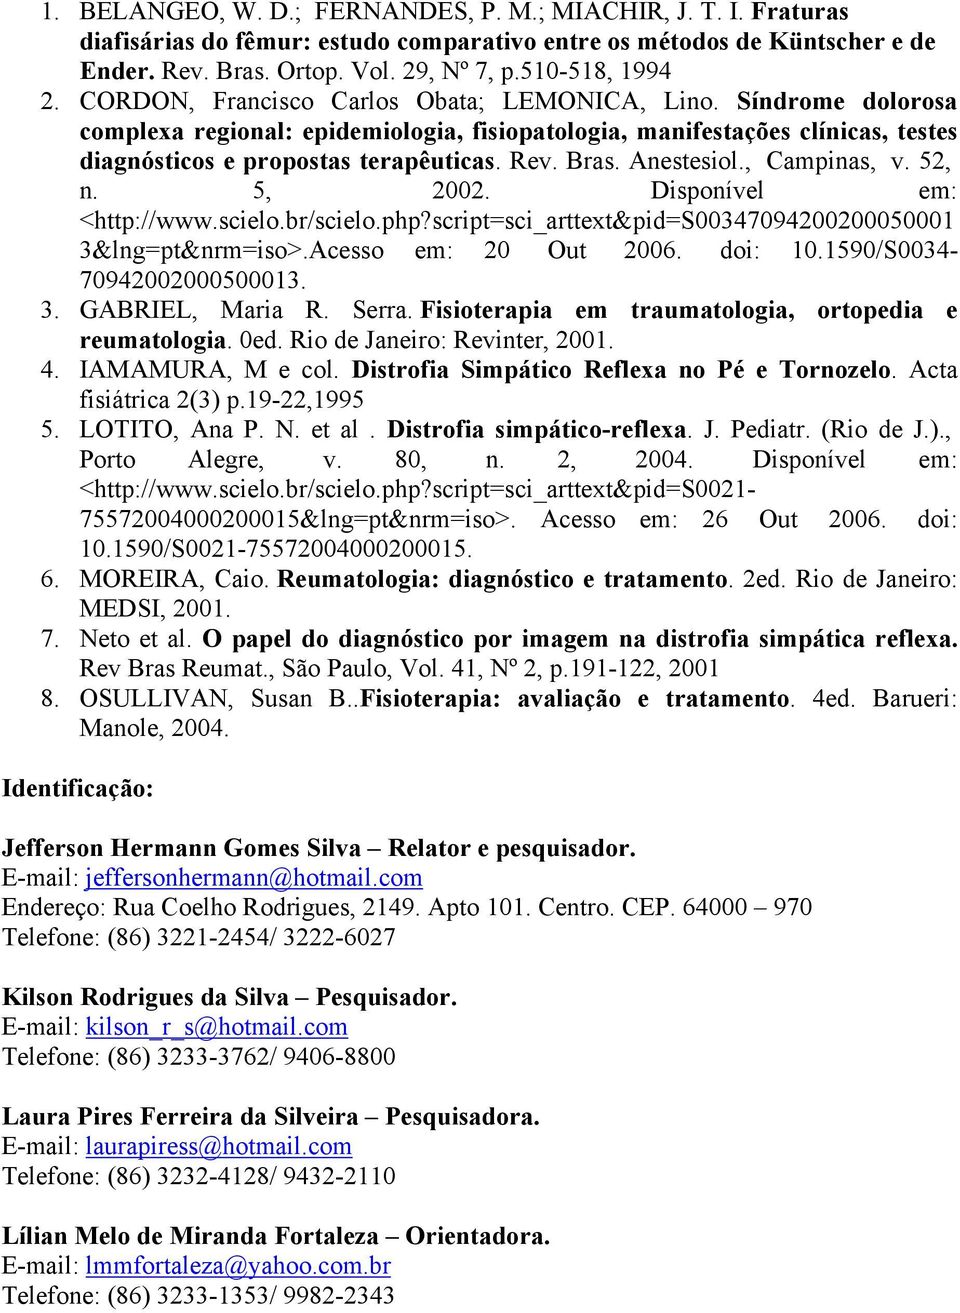 Anestesiol., Campinas, v. 52, n. 5, 2002. Disponível em: <http://www.scielo.br/scielo.php?script=sci_arttext&pid=s00347094200200050001 3&lng=pt&nrm=iso>.Acesso em: 20 Out 2006. doi: 10.